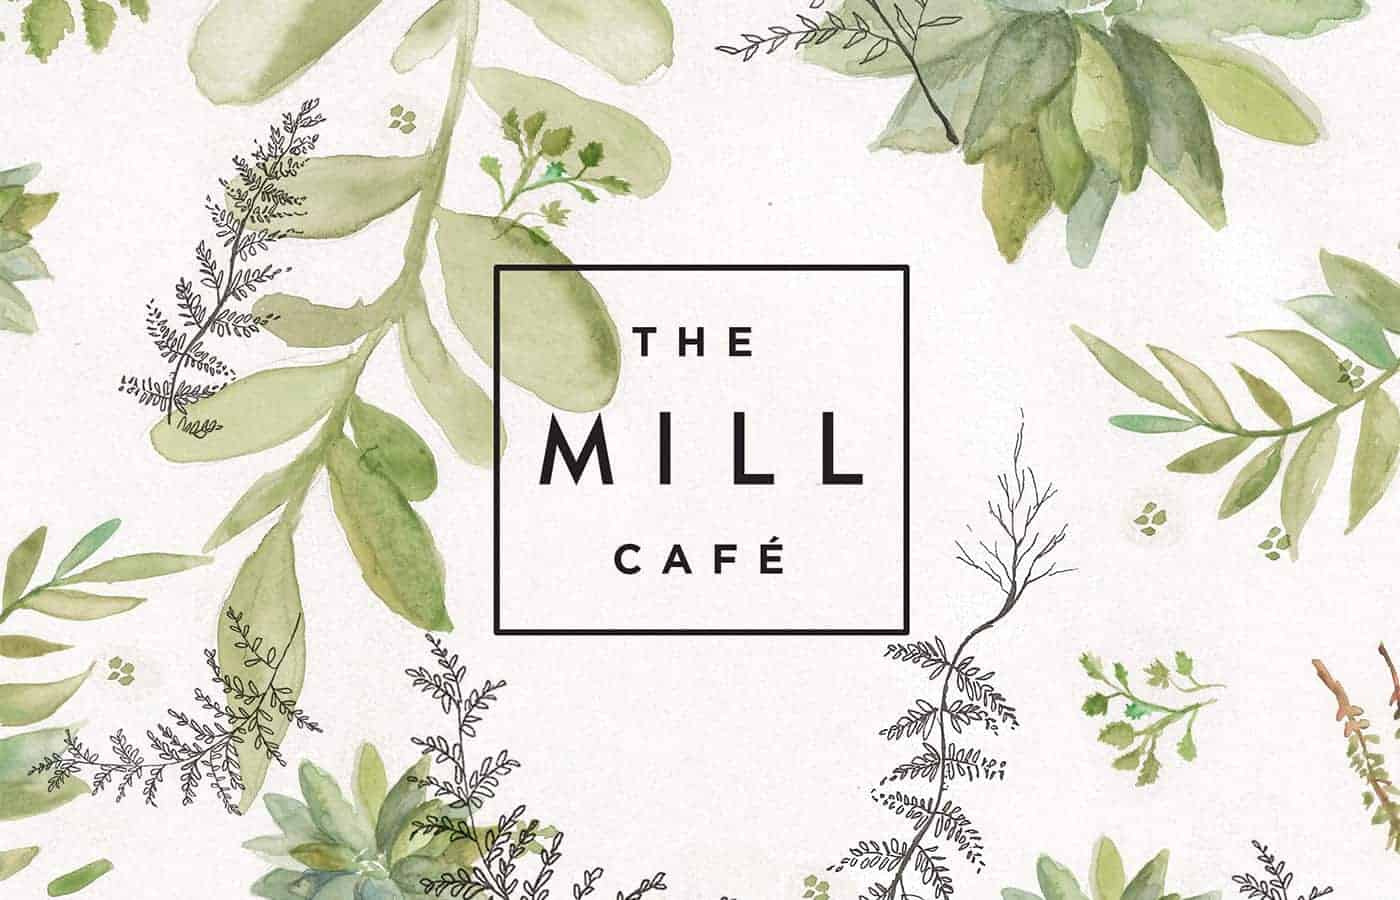 The Mill Café by Matilda van der Walt